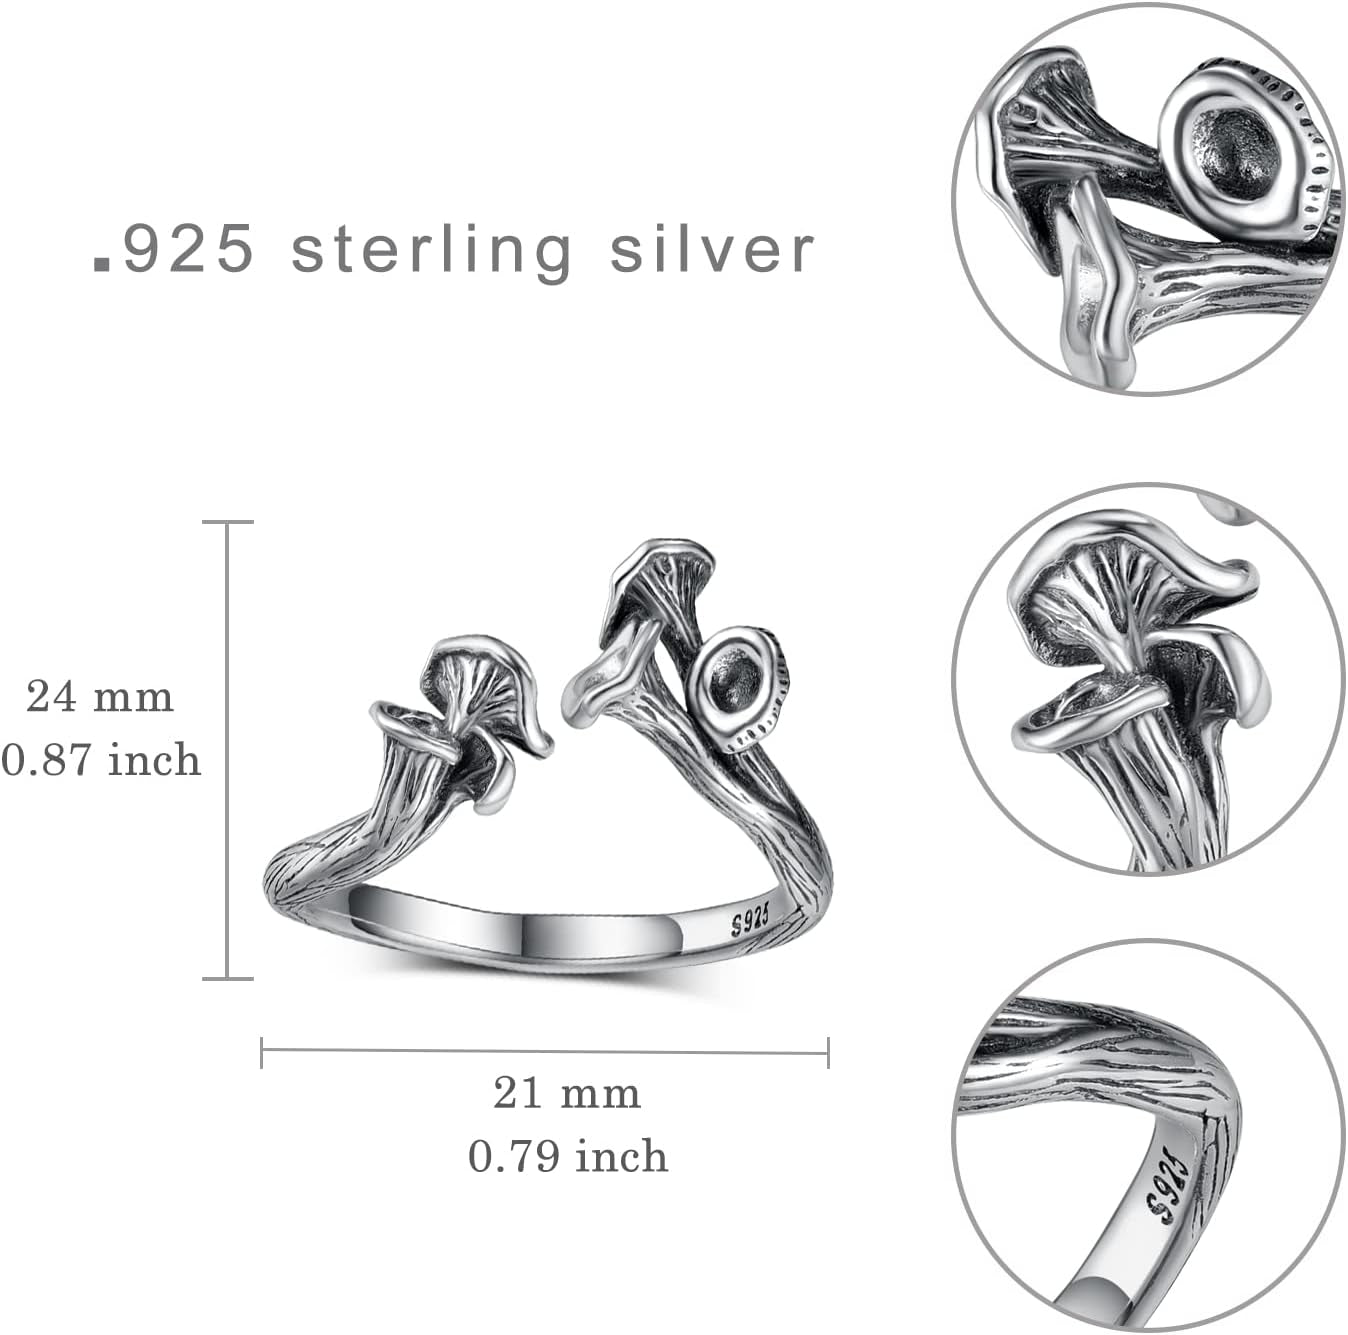 Chanterelle Mushroom Rings for Women Sterling Silver Vintage Cute Adjustable Open Wrap Ring Jewelry